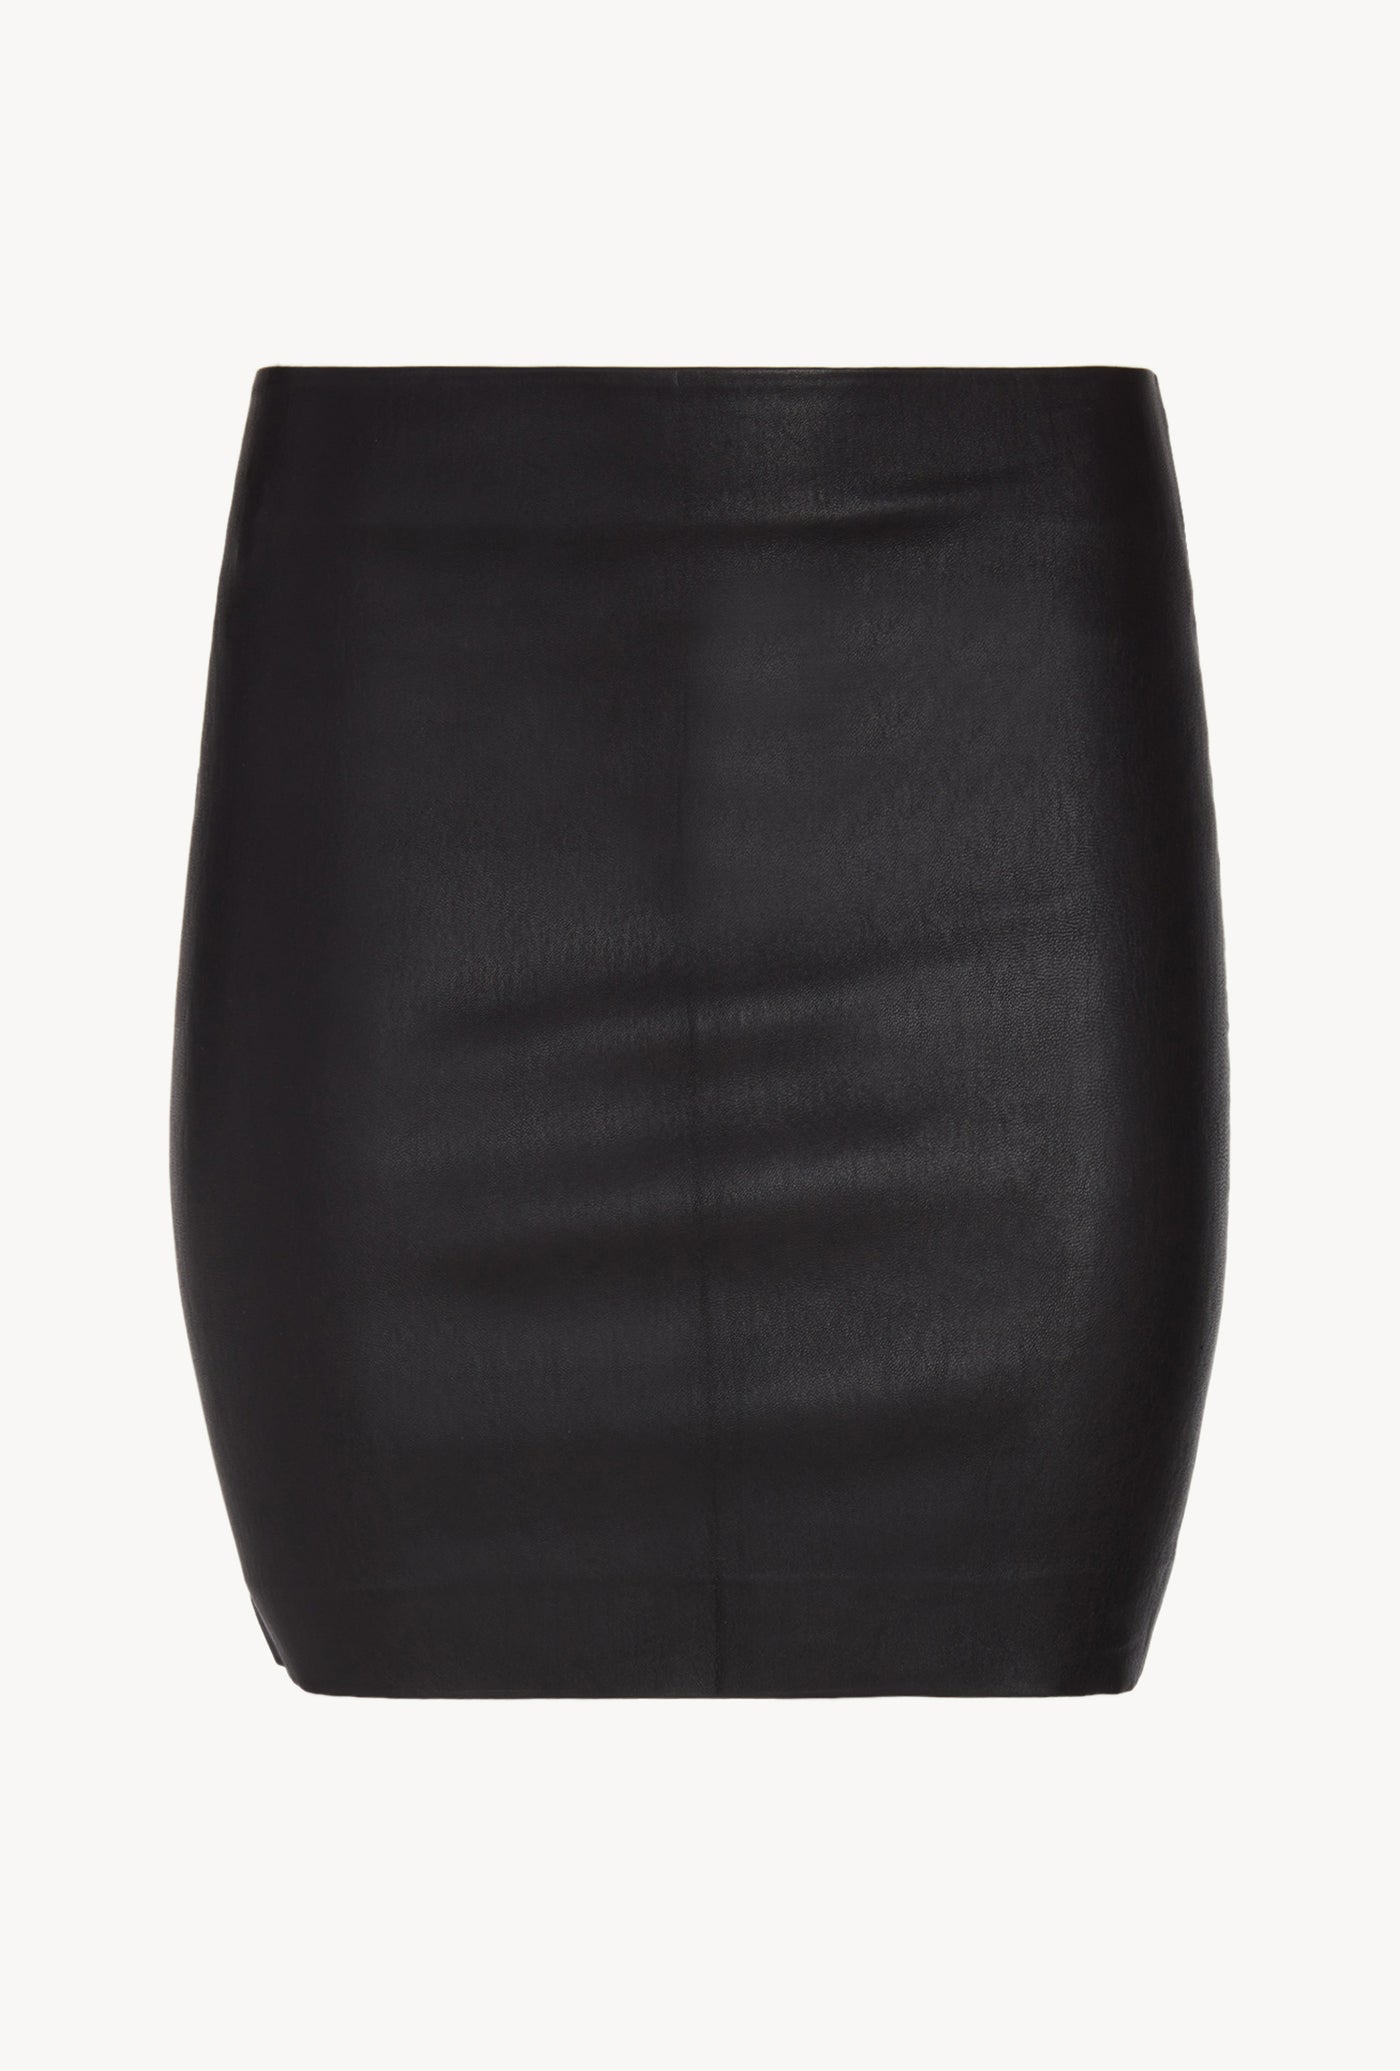 Black Leather Classic Mini Skirt